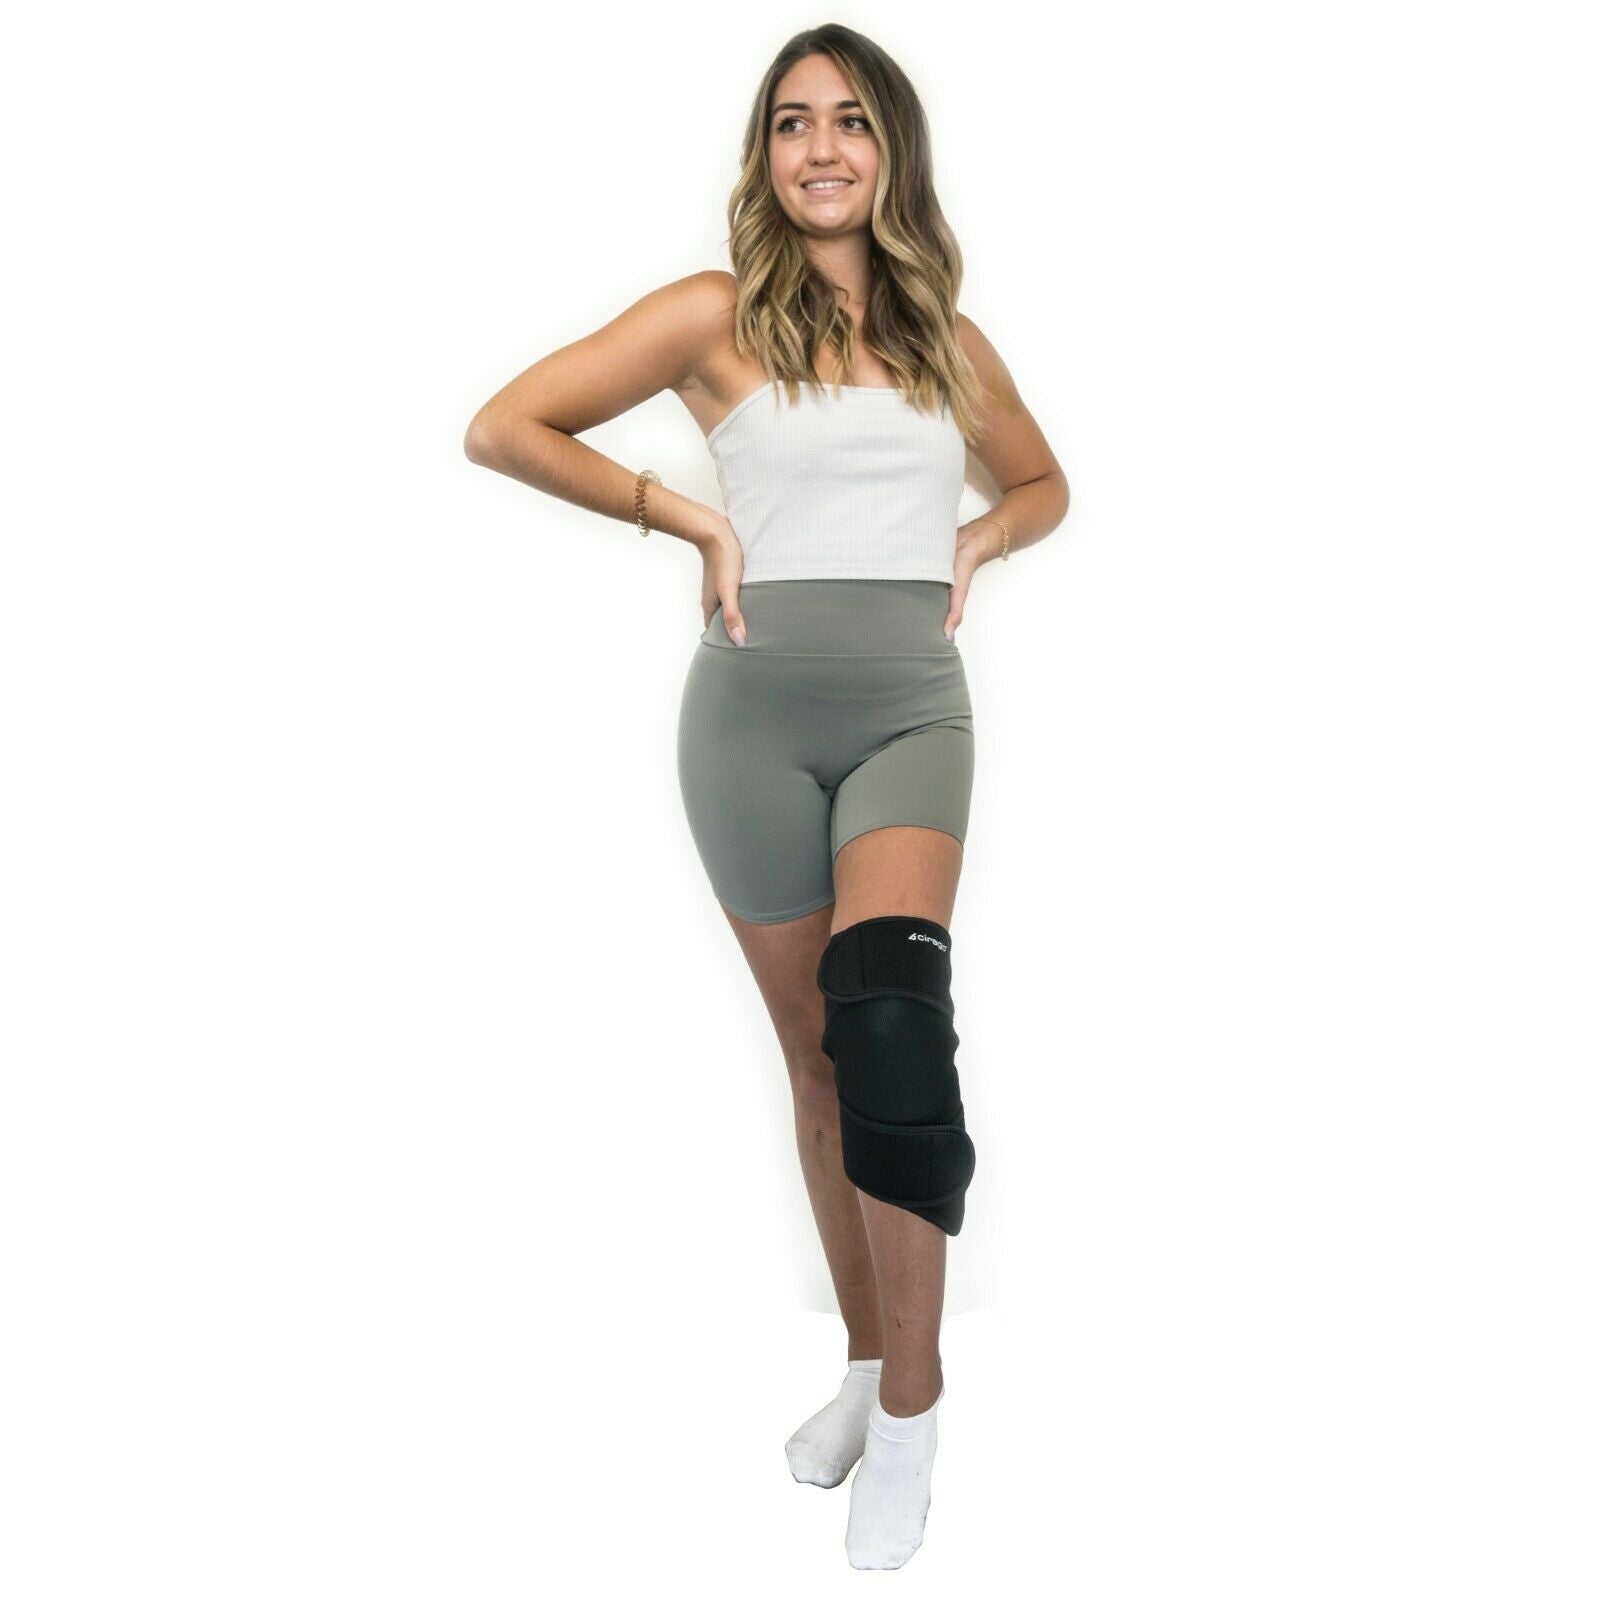 Cirago Graphene Far Infrared Heating Knee Wrap Pad for Arthritis Pain Therapy